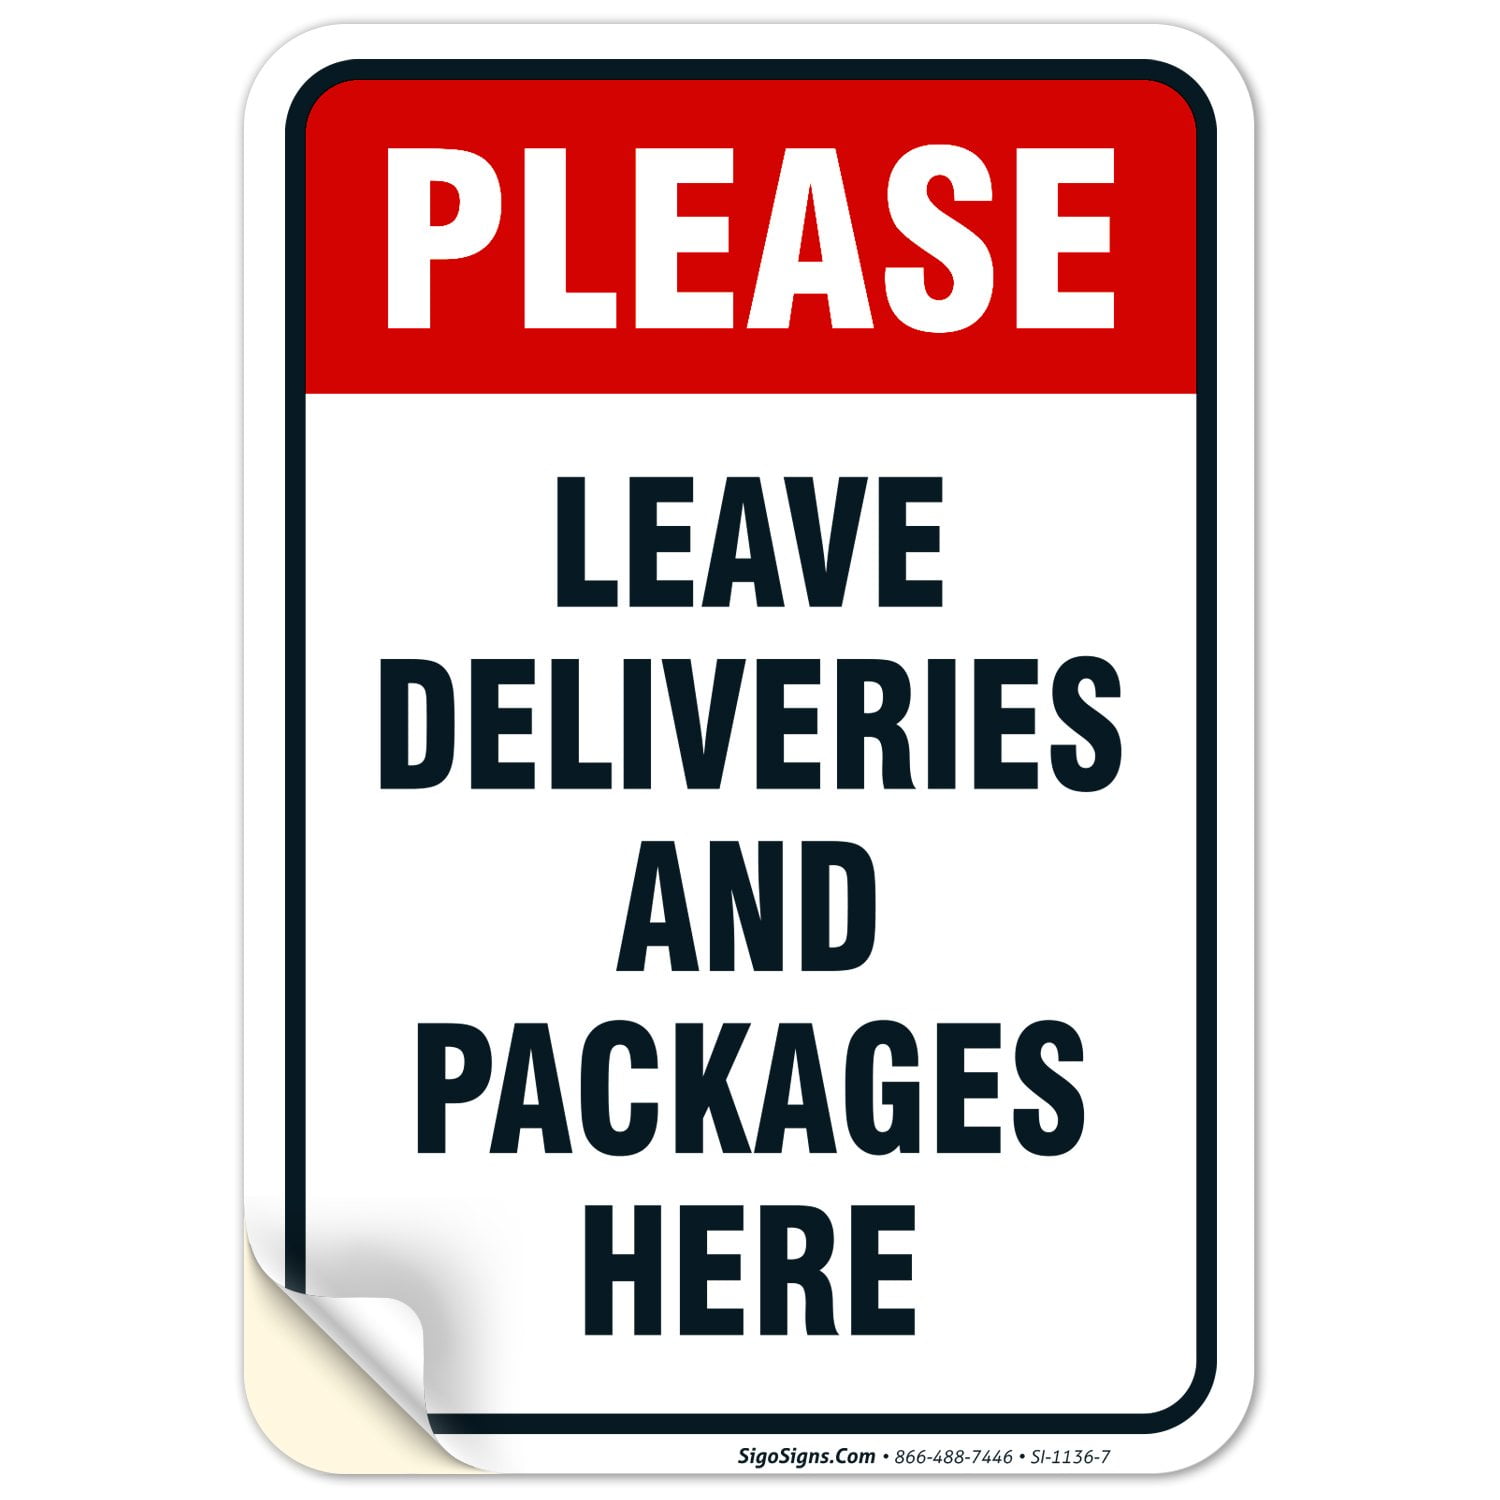 Please leave parcels at the back door sticker 